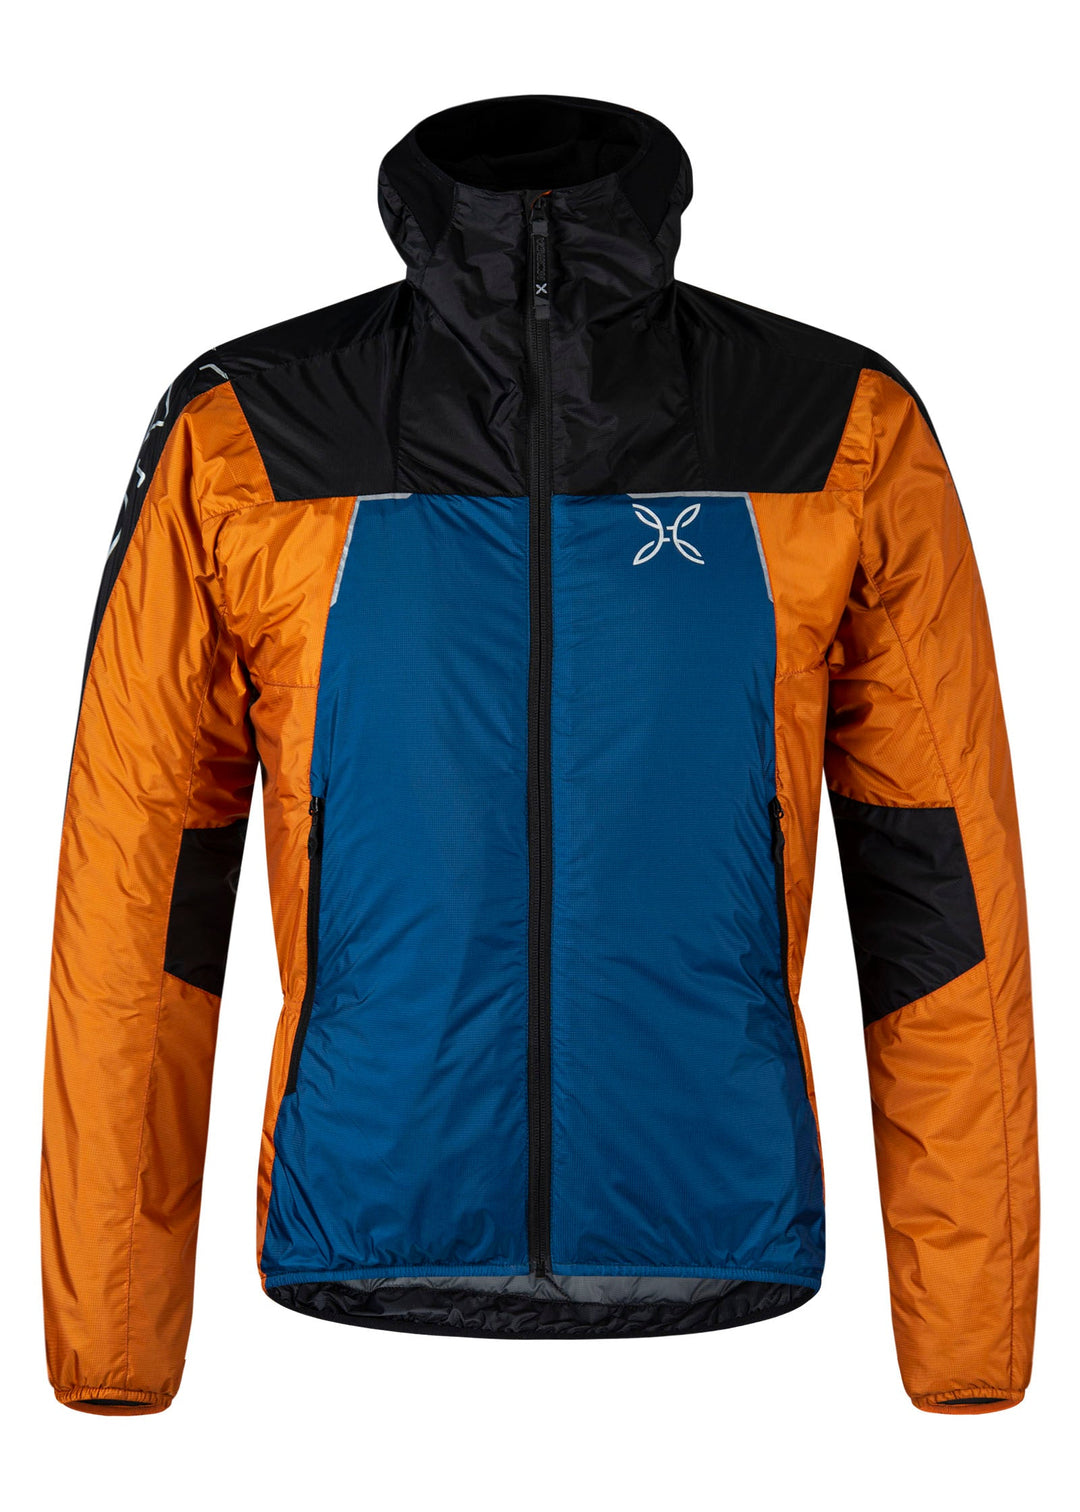 Skisky 2.0 Jacket - Deep Blue/Mandarino (8766) - Blogside